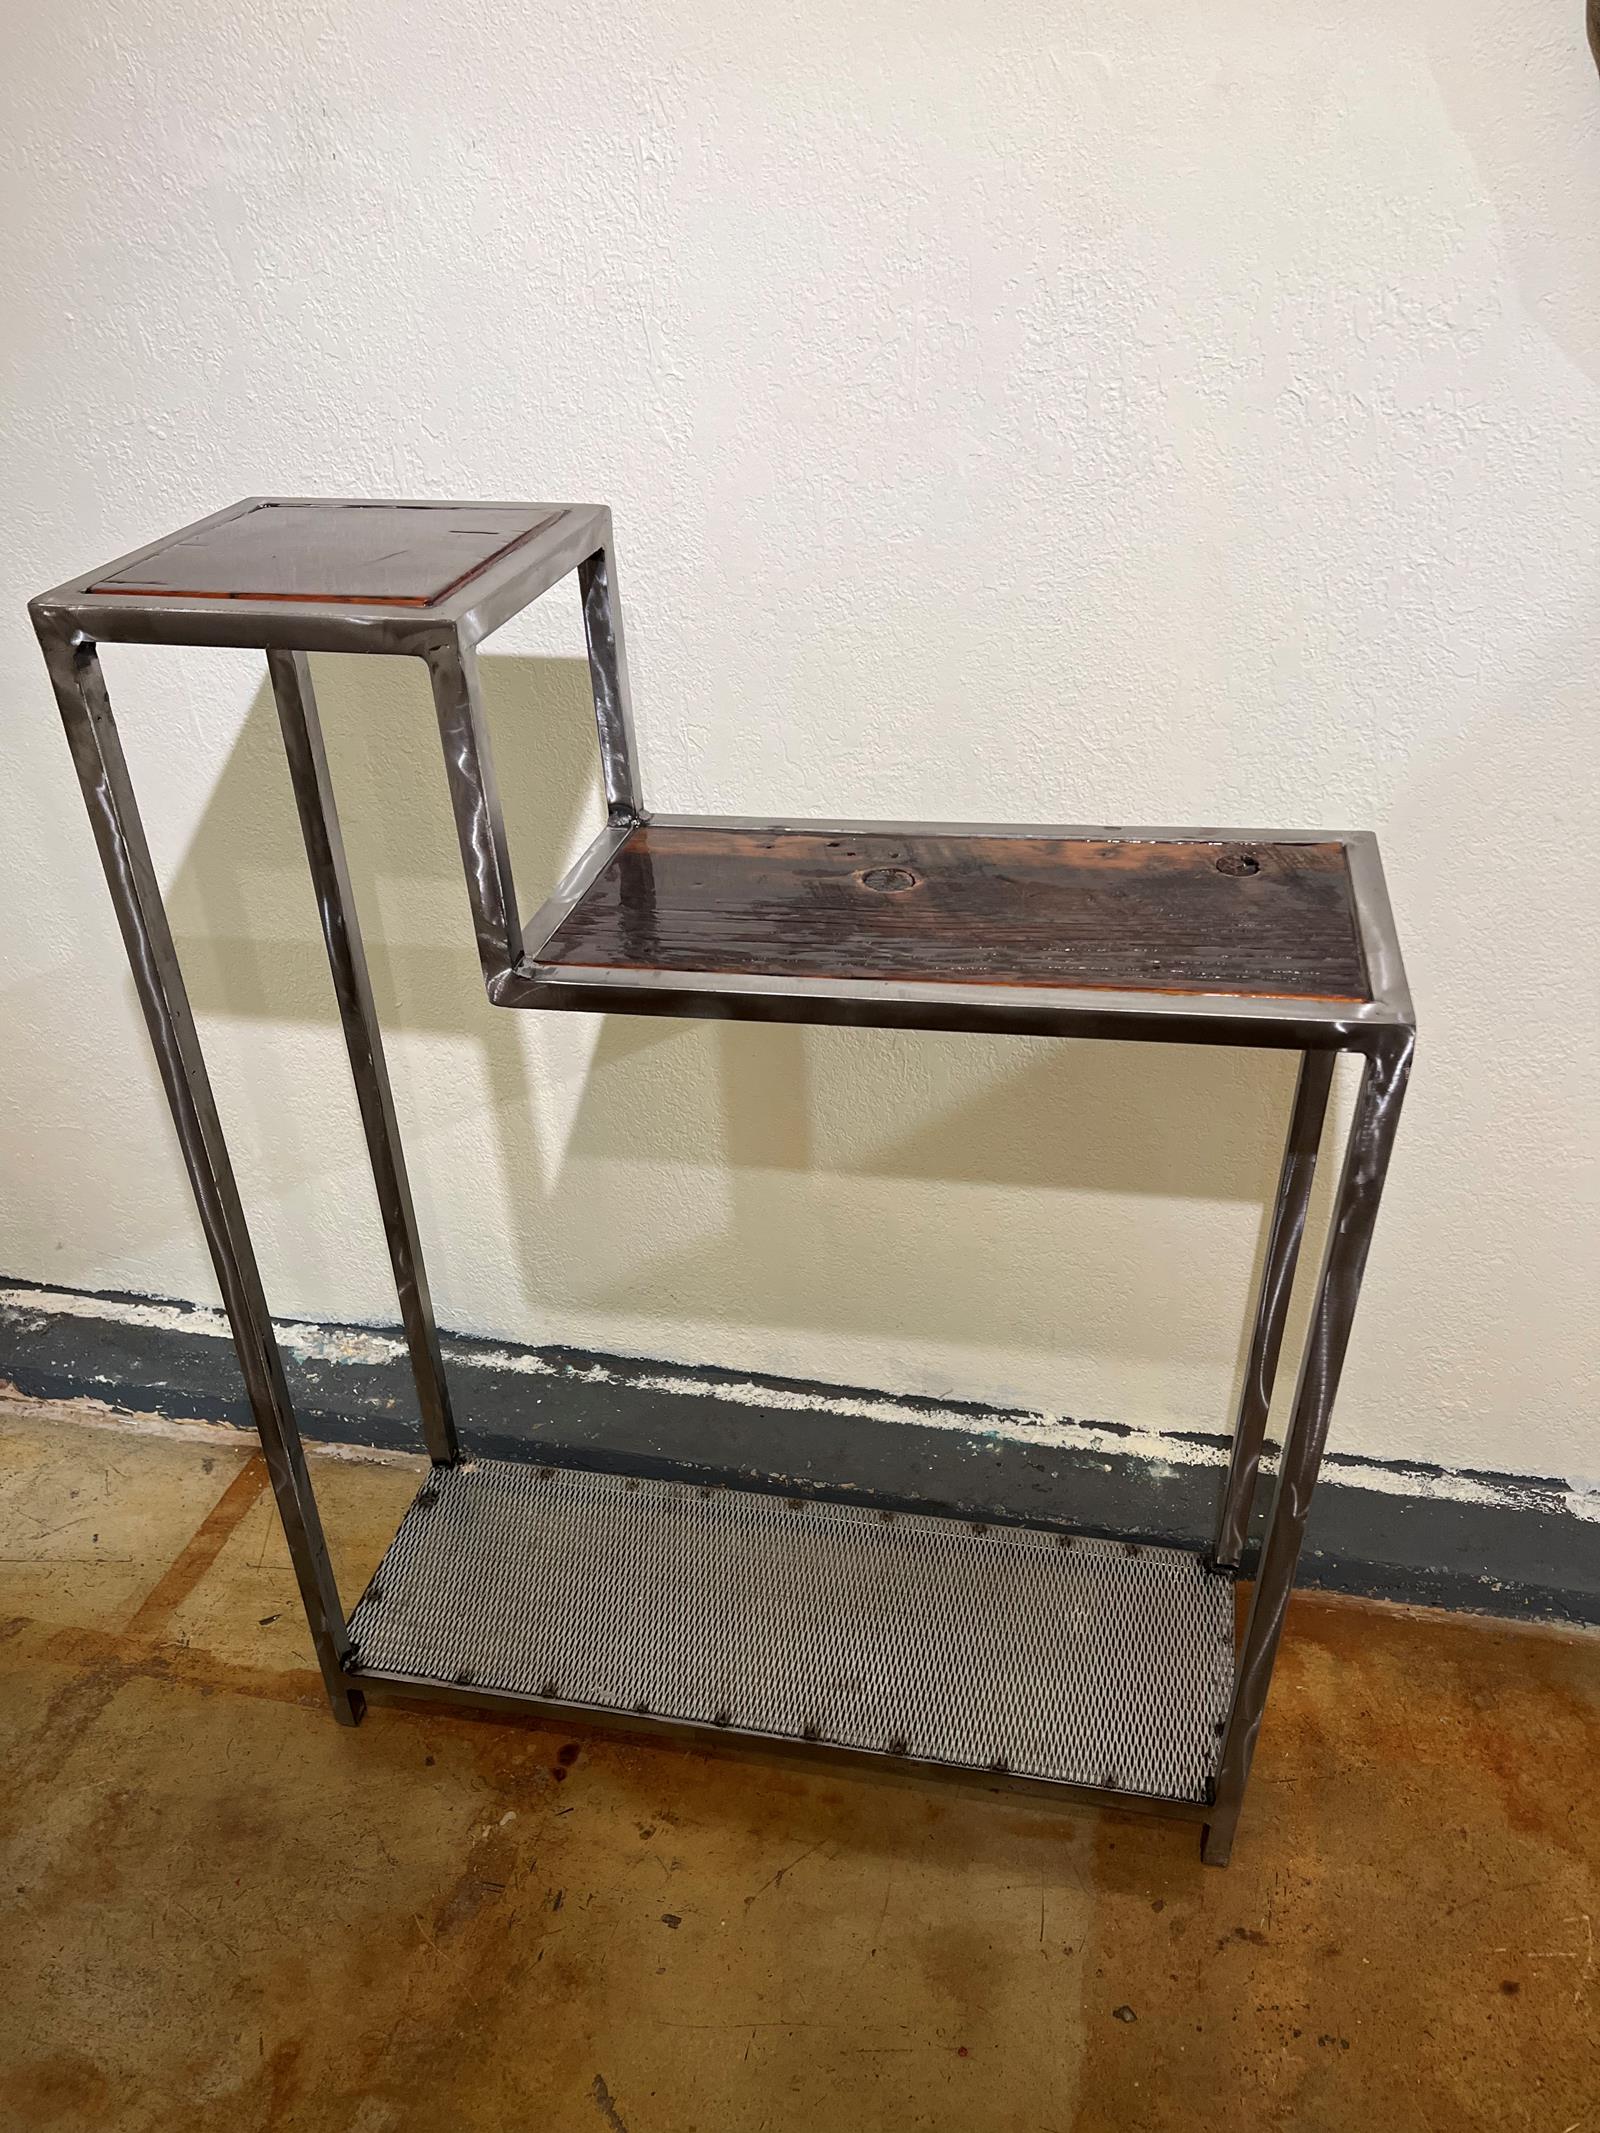 Rustic industrial, metal shelf, wooden top, w matching mini table 0